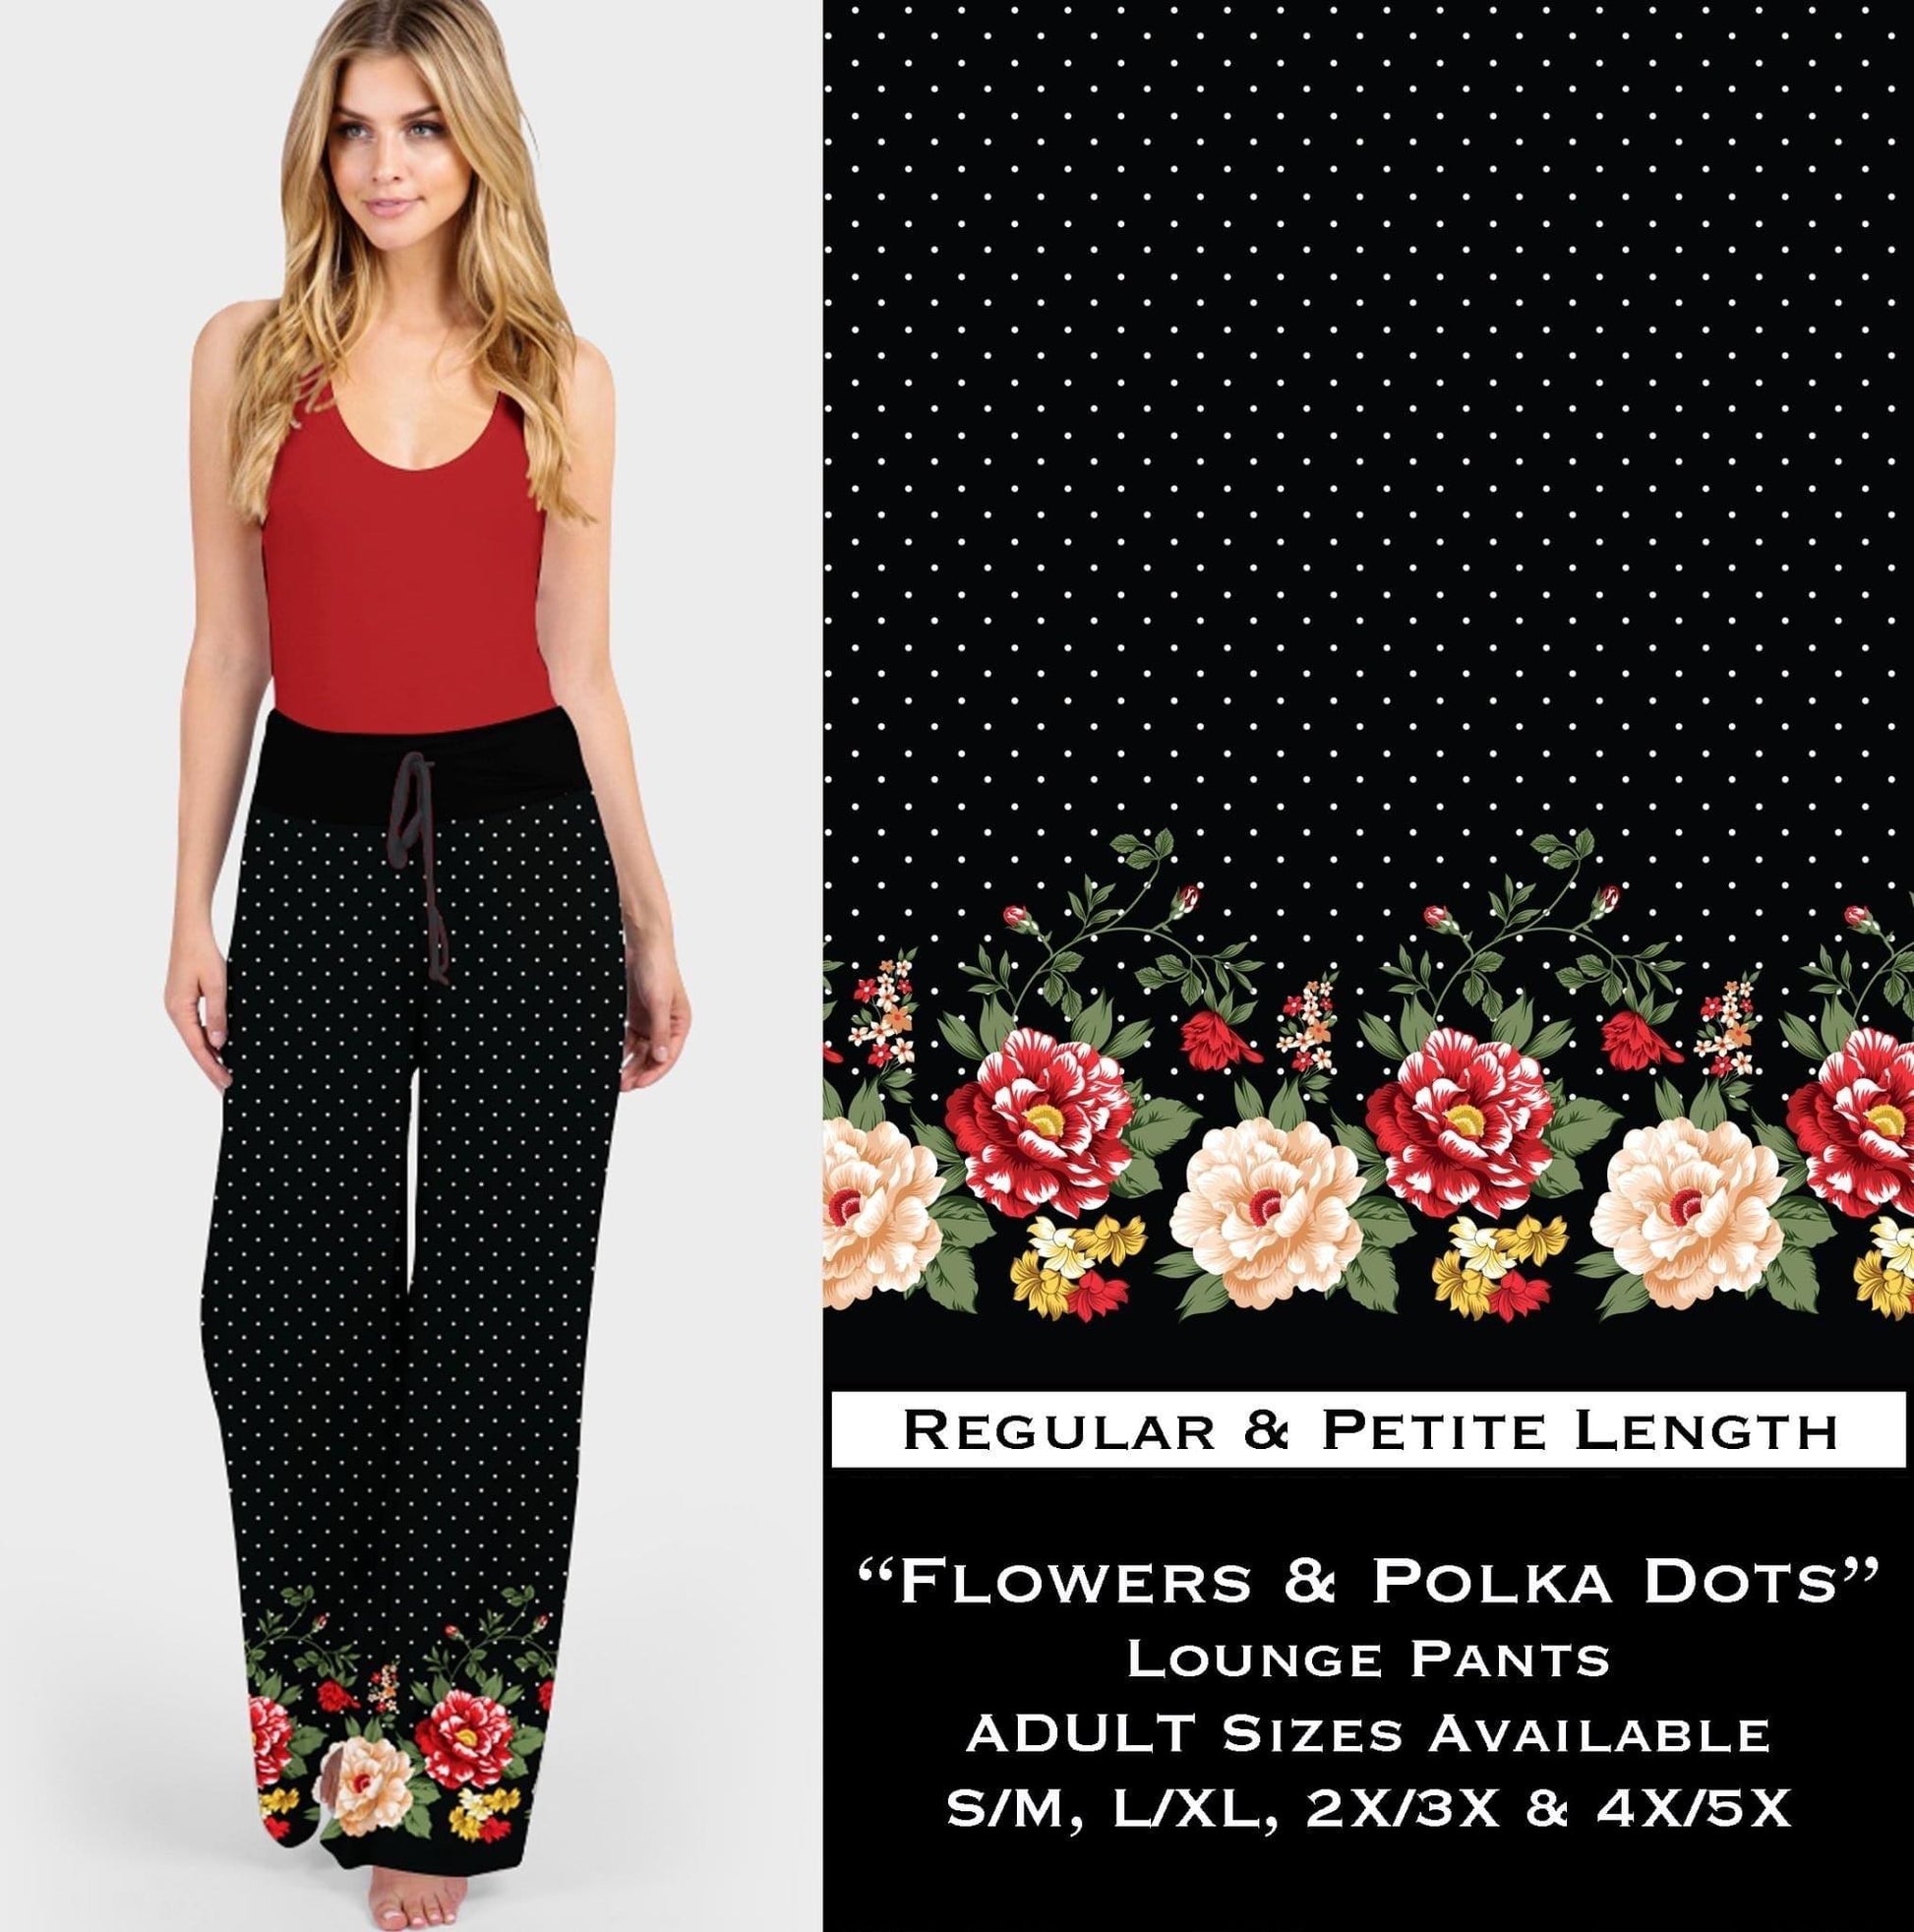 Flowers & Polka Dots Lounge Pants - That’s So Fletch Boutique 